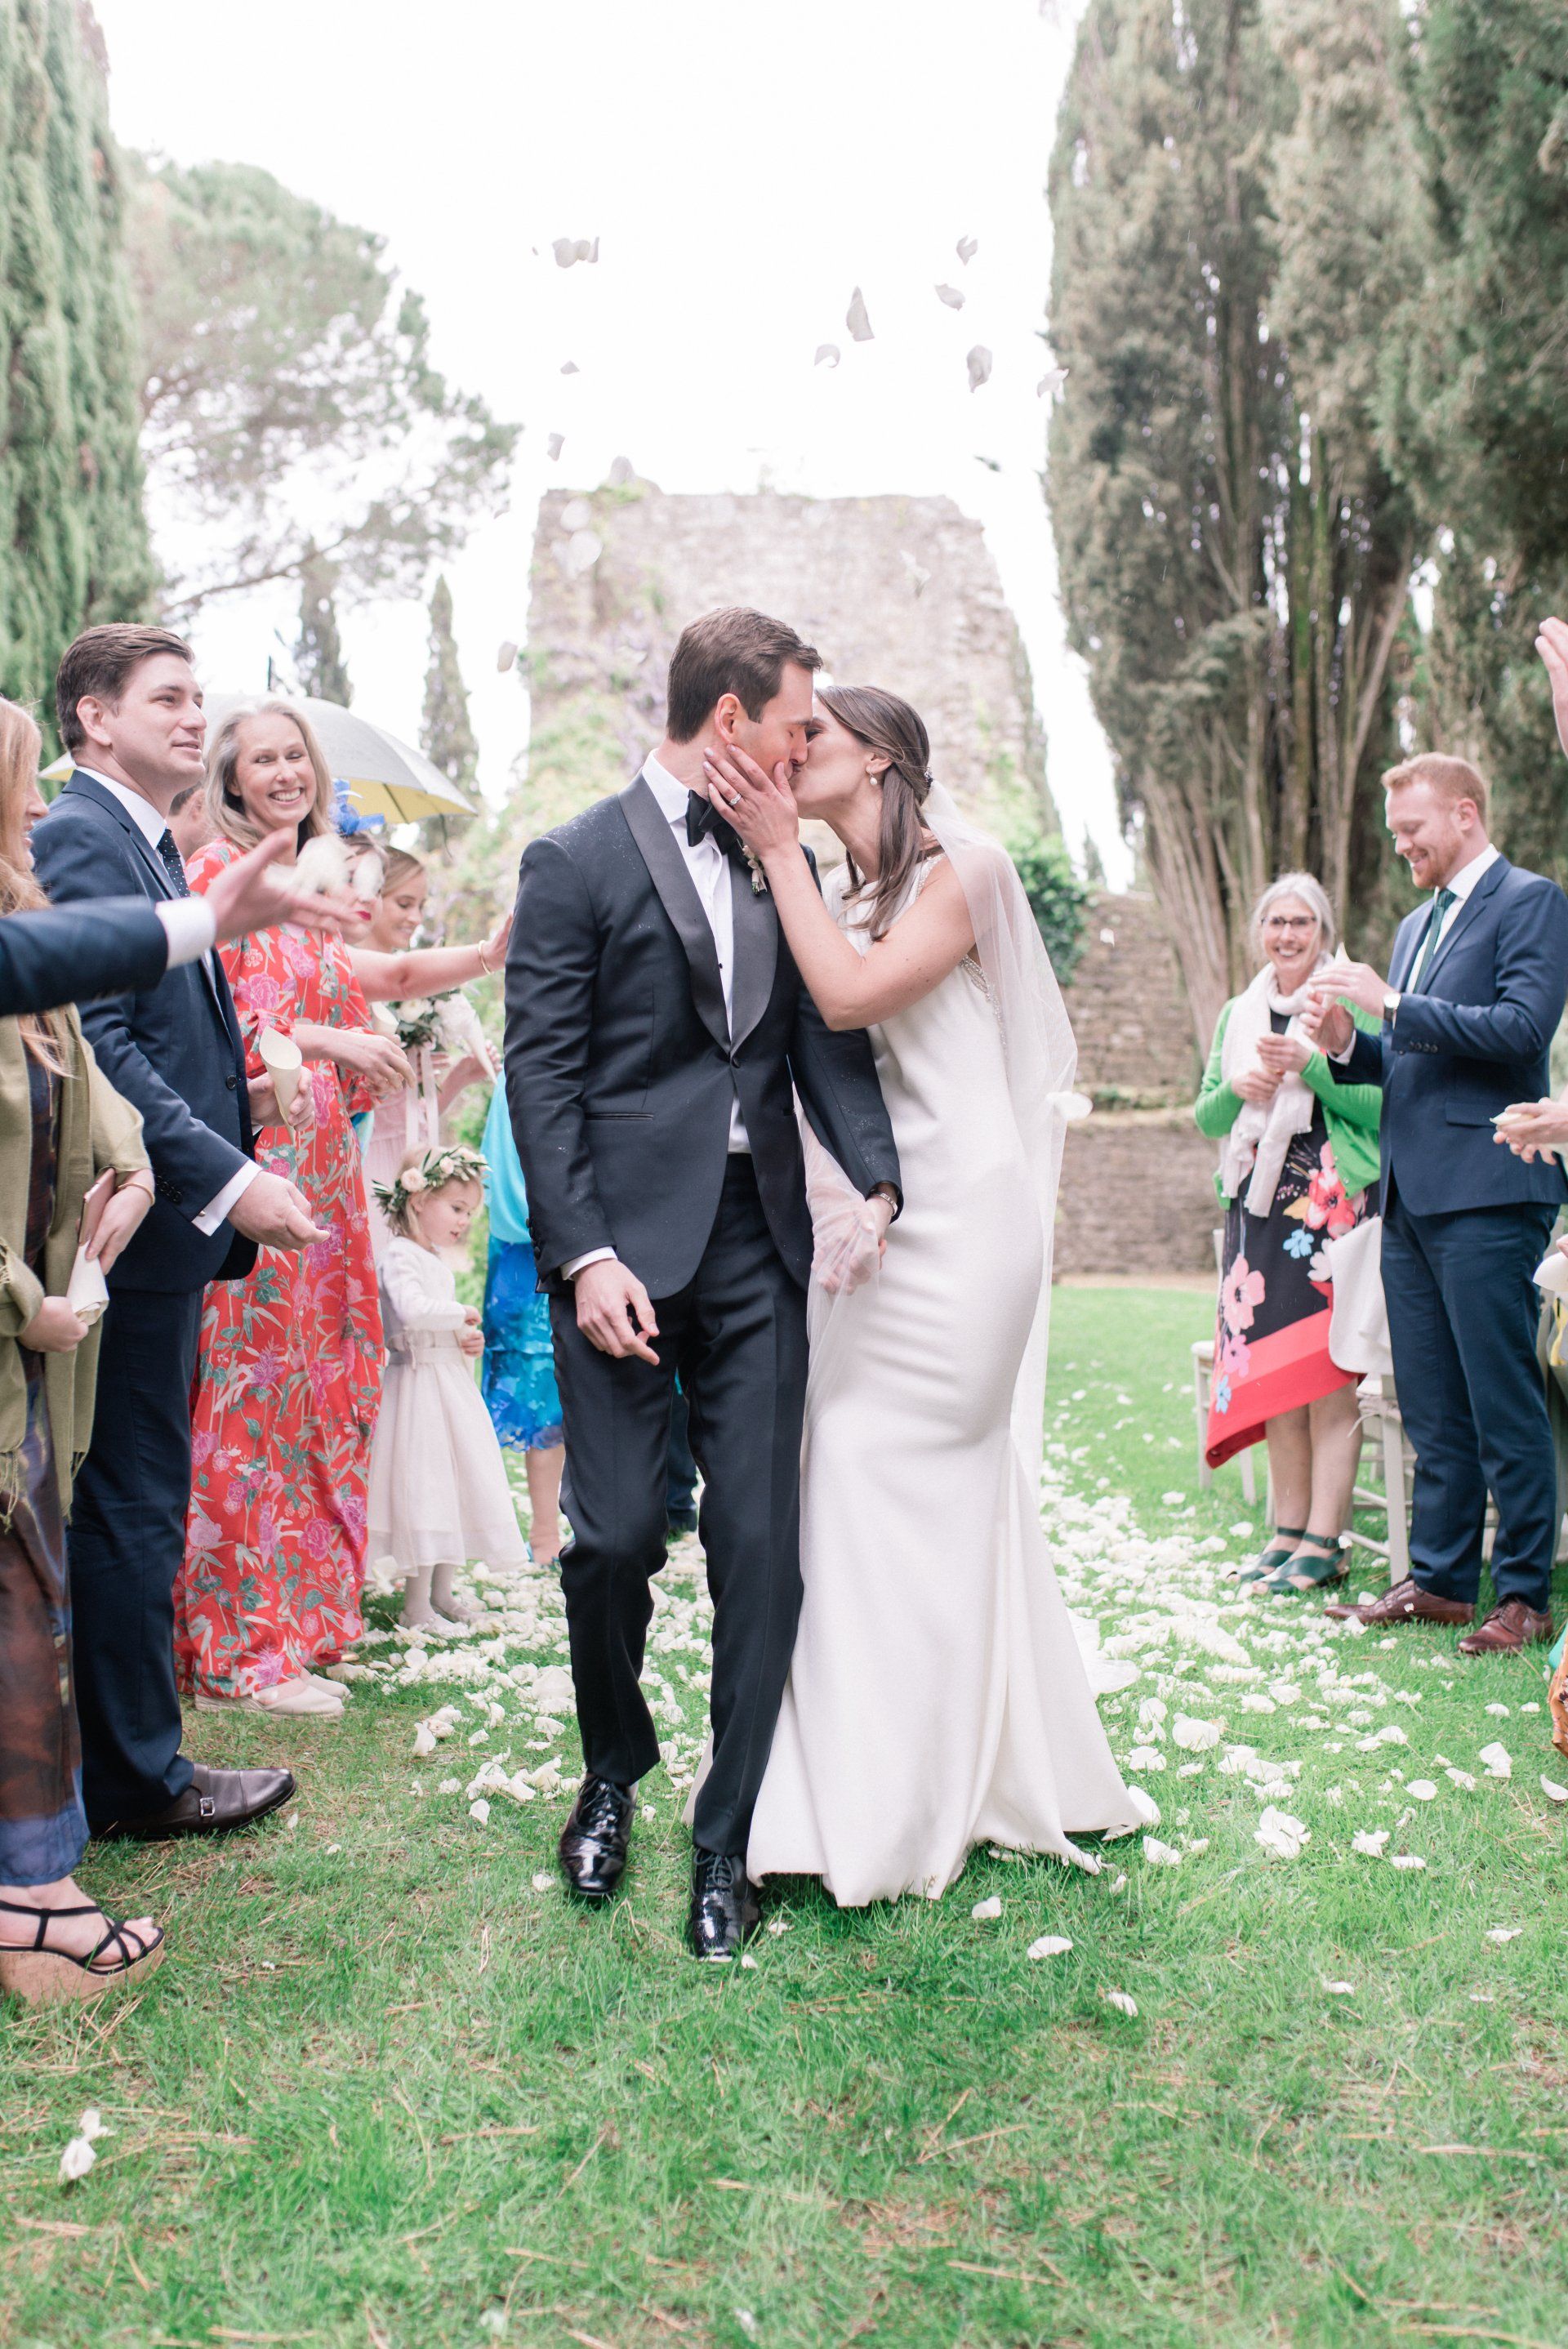 Tuscany wedding photographer, #rosewoodcastigliondelbosco , fotografo matrimonio toscana